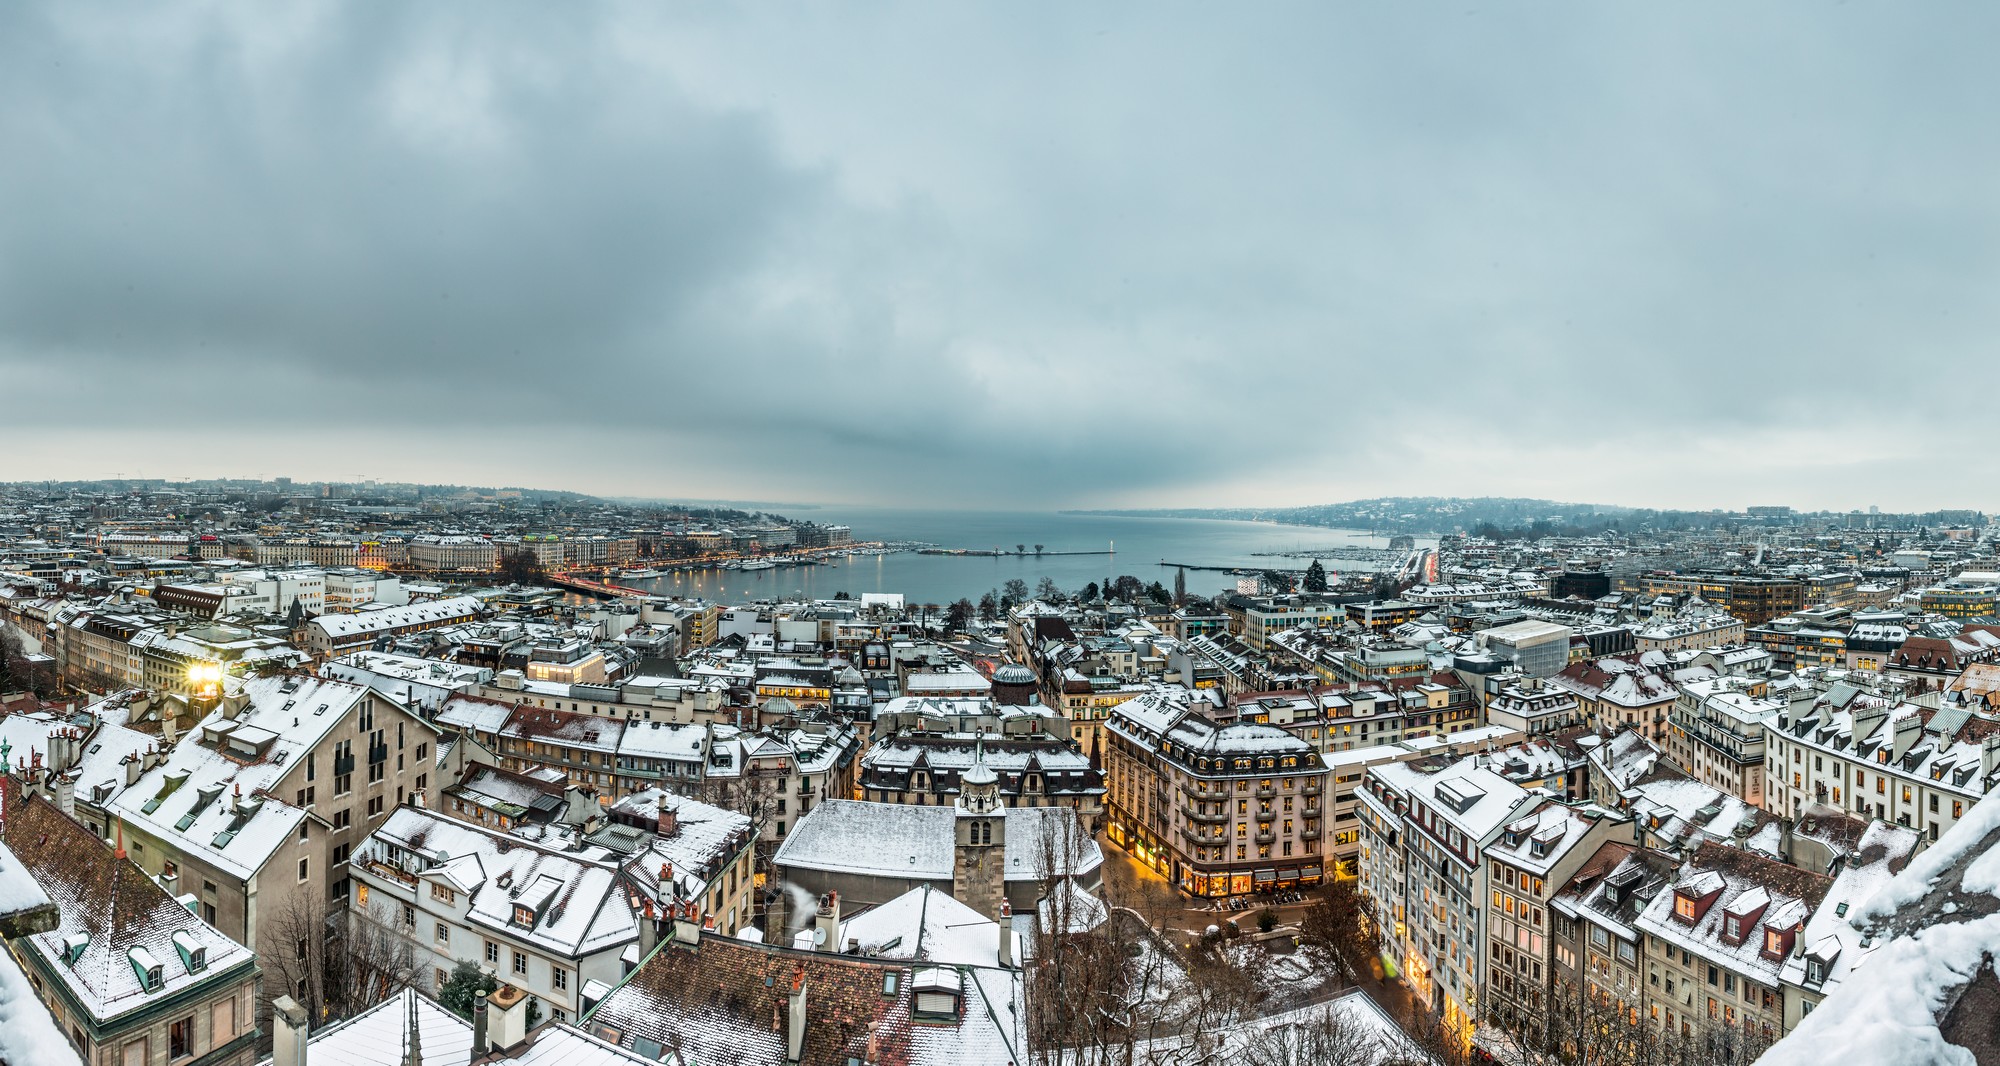 Geneva in winter - Photo ©Switzerland Tourism - swiss-image.ch/Jan Geerk